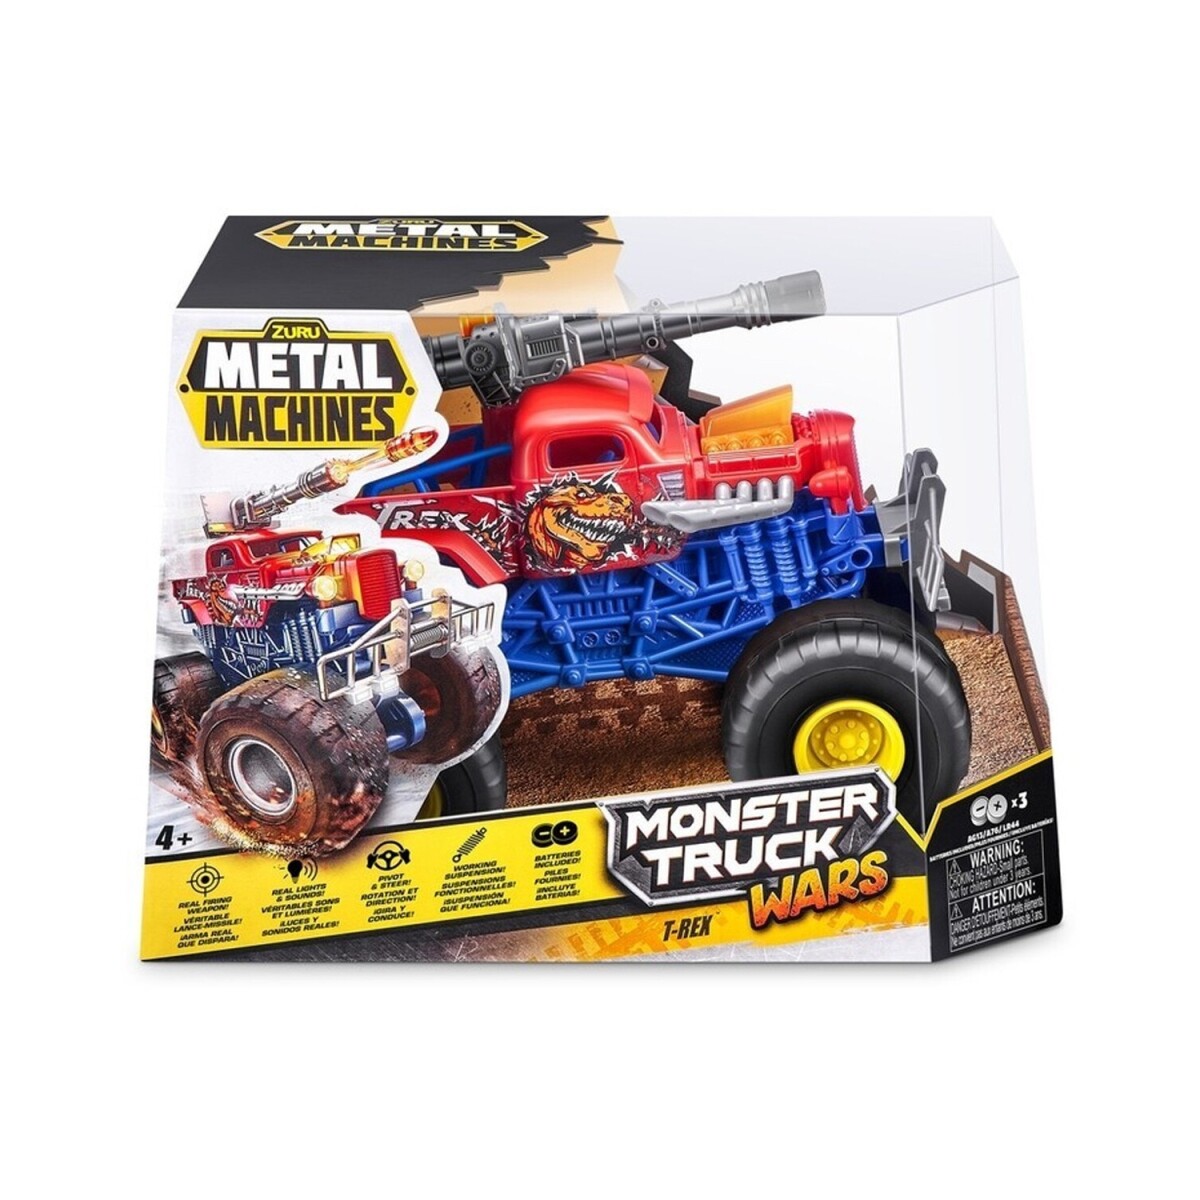 Camión Monster Truck Metal Machines con luces y sonido - Monster Truck Wars 